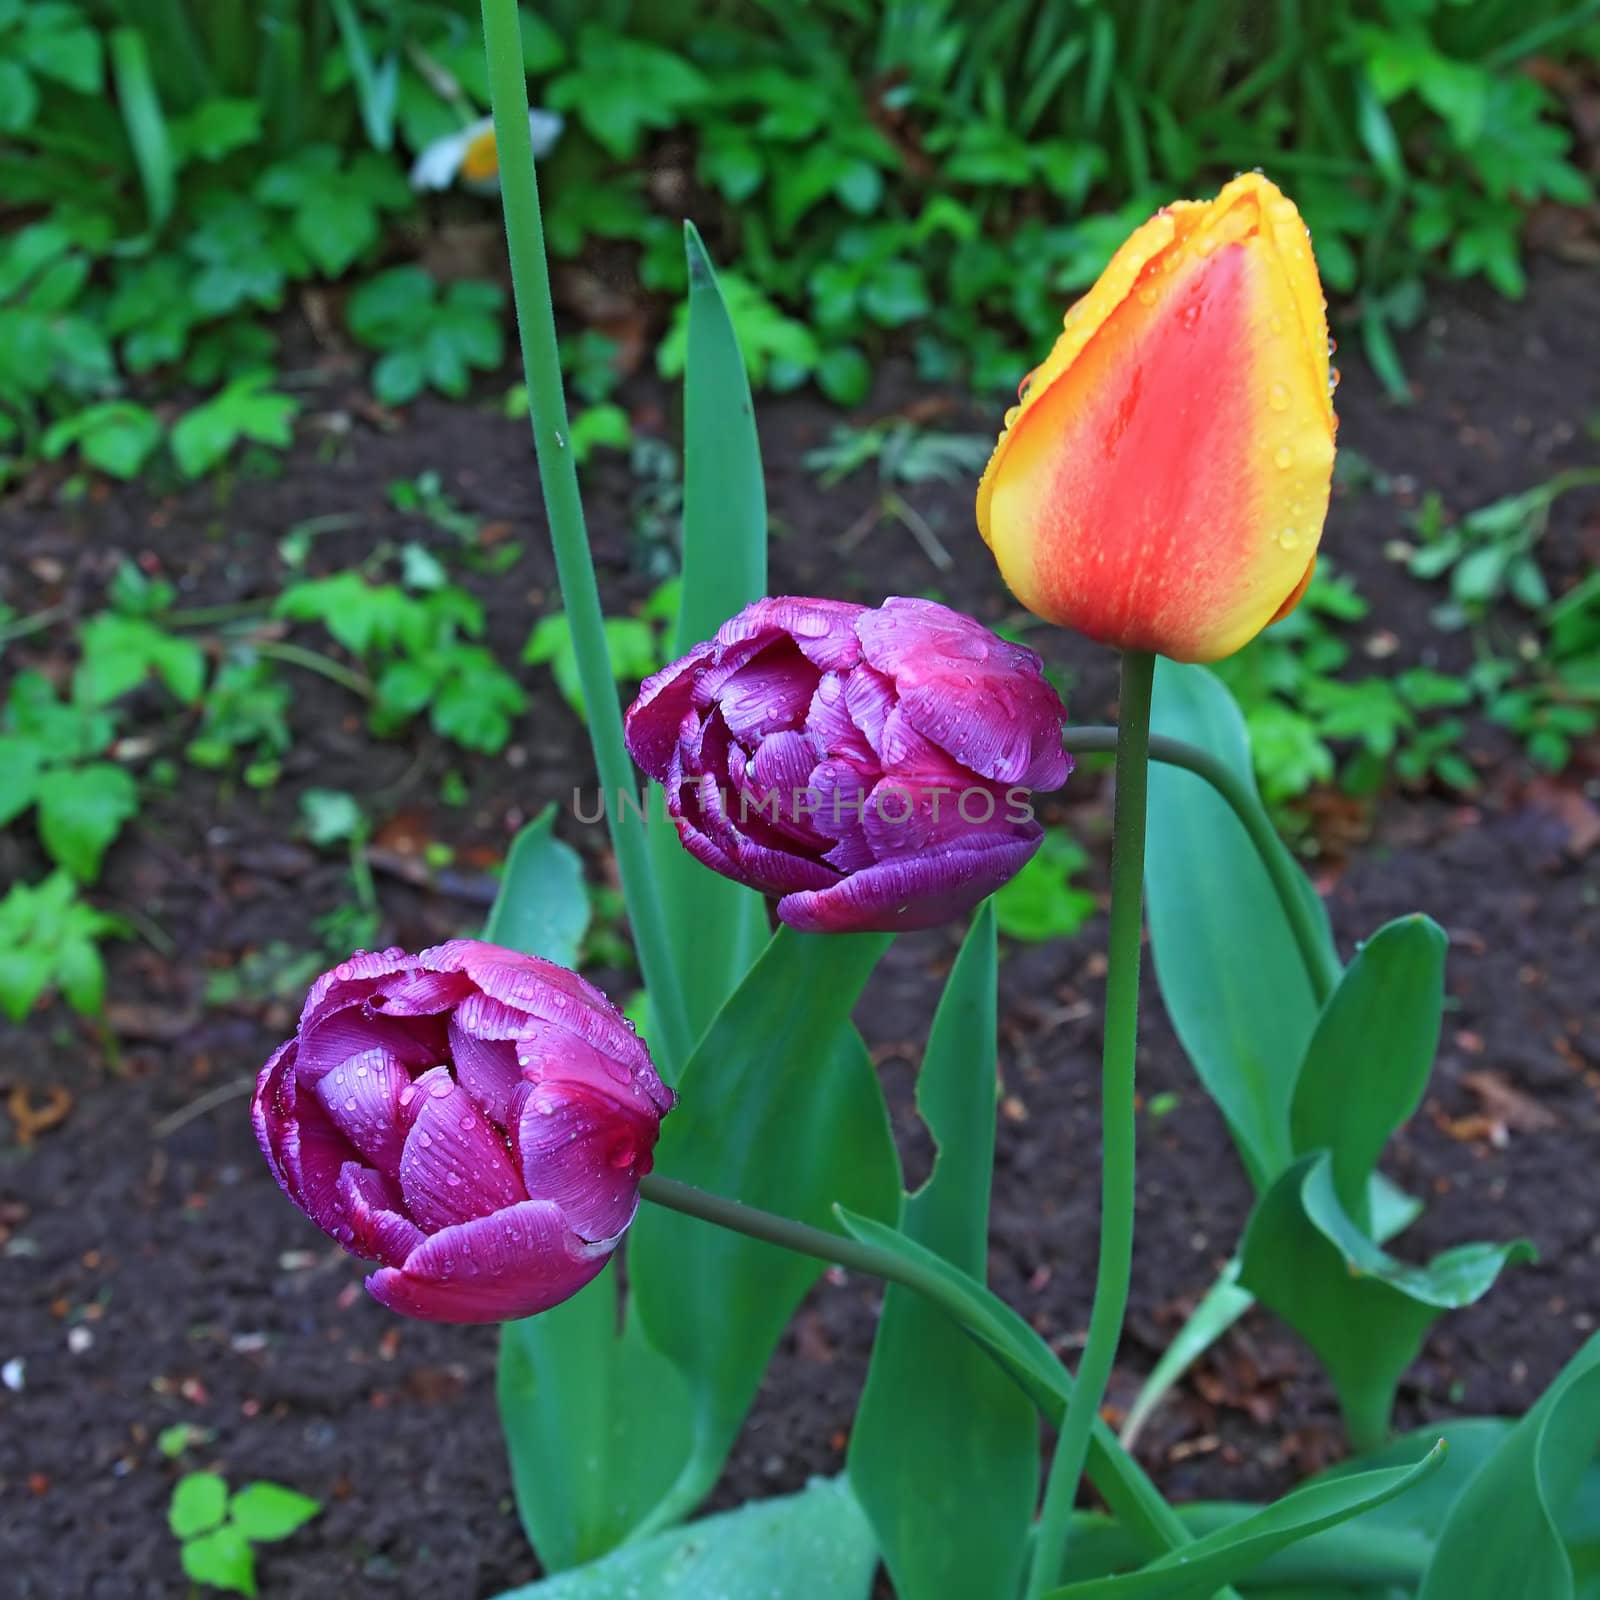 varicoloured tulips with rural garden